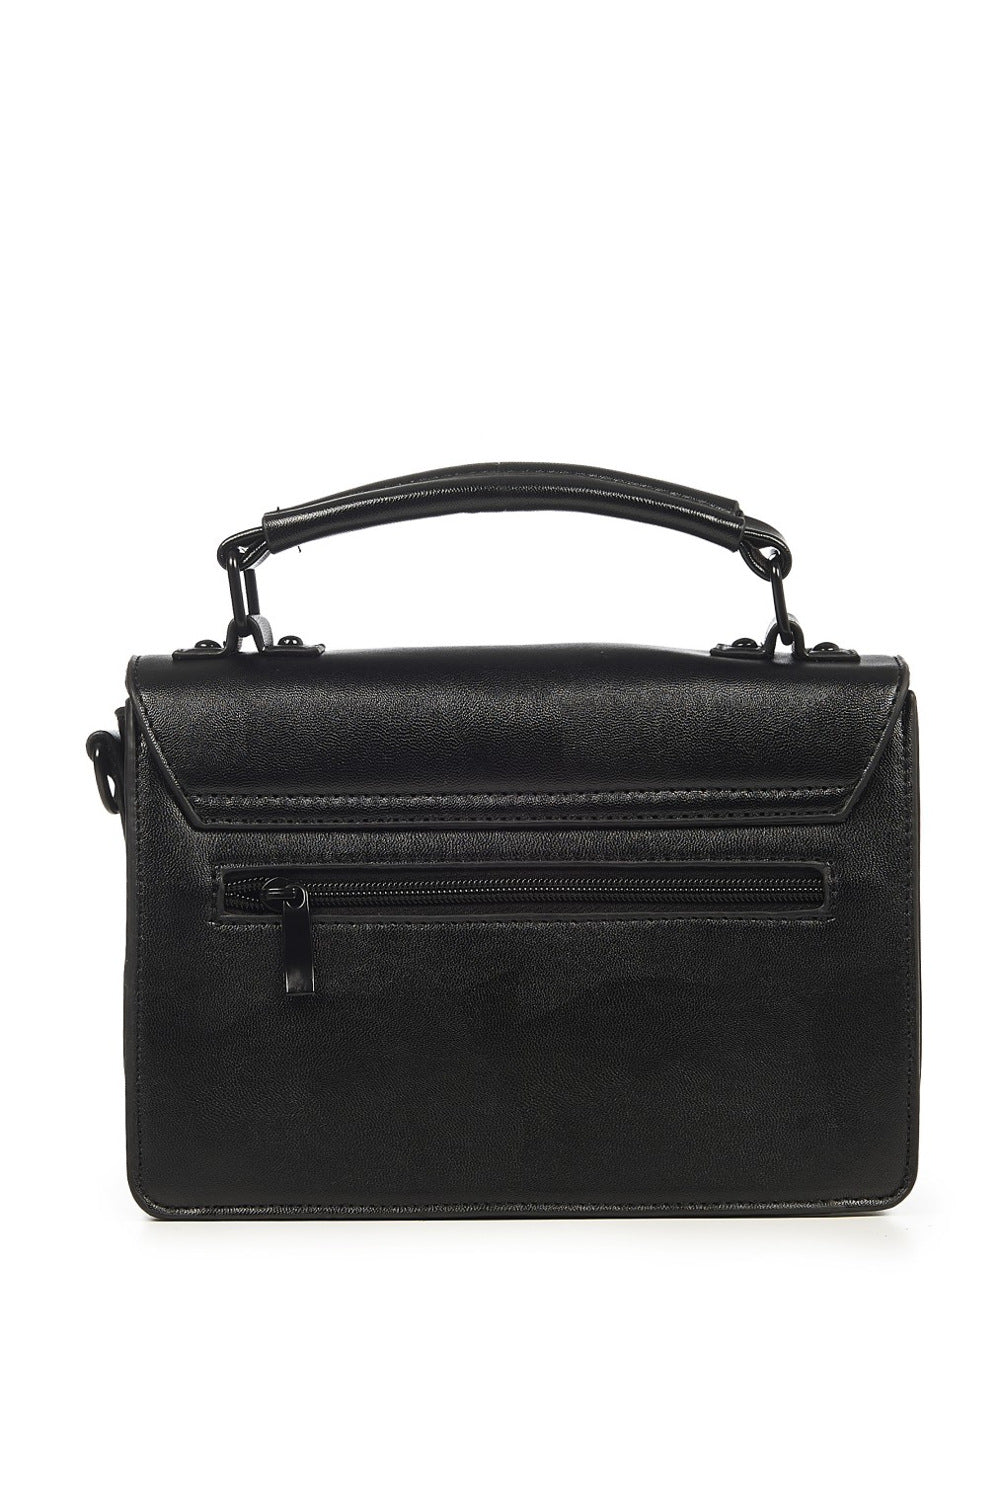 Back of Black satchel handbag with bat emboss print